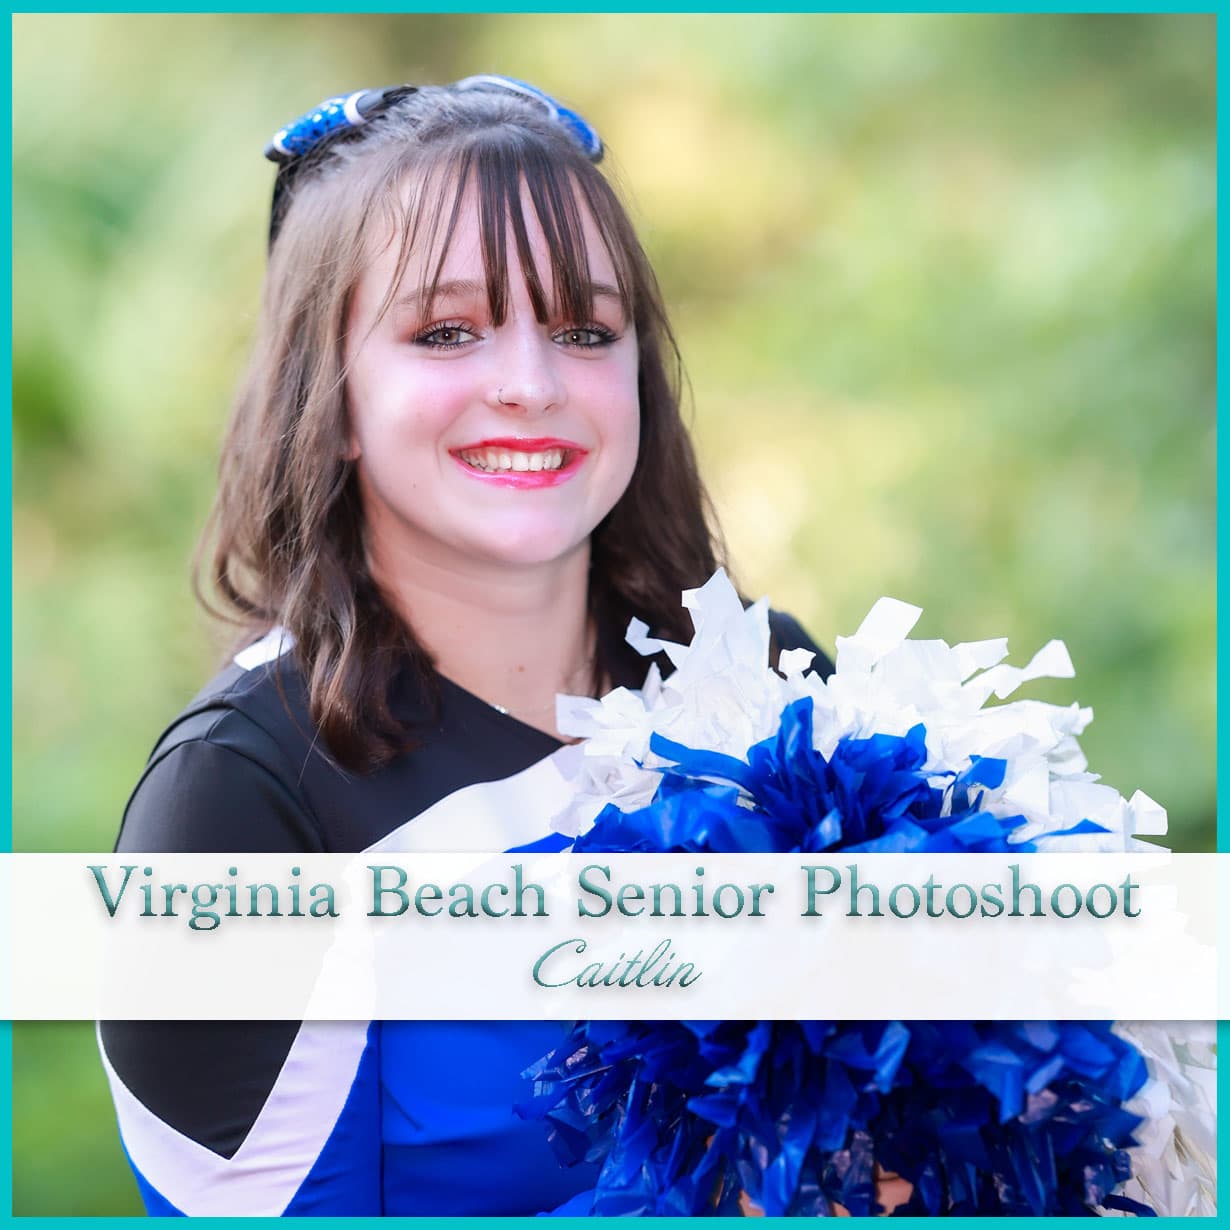 Virginia Beach Senior Photoshoot